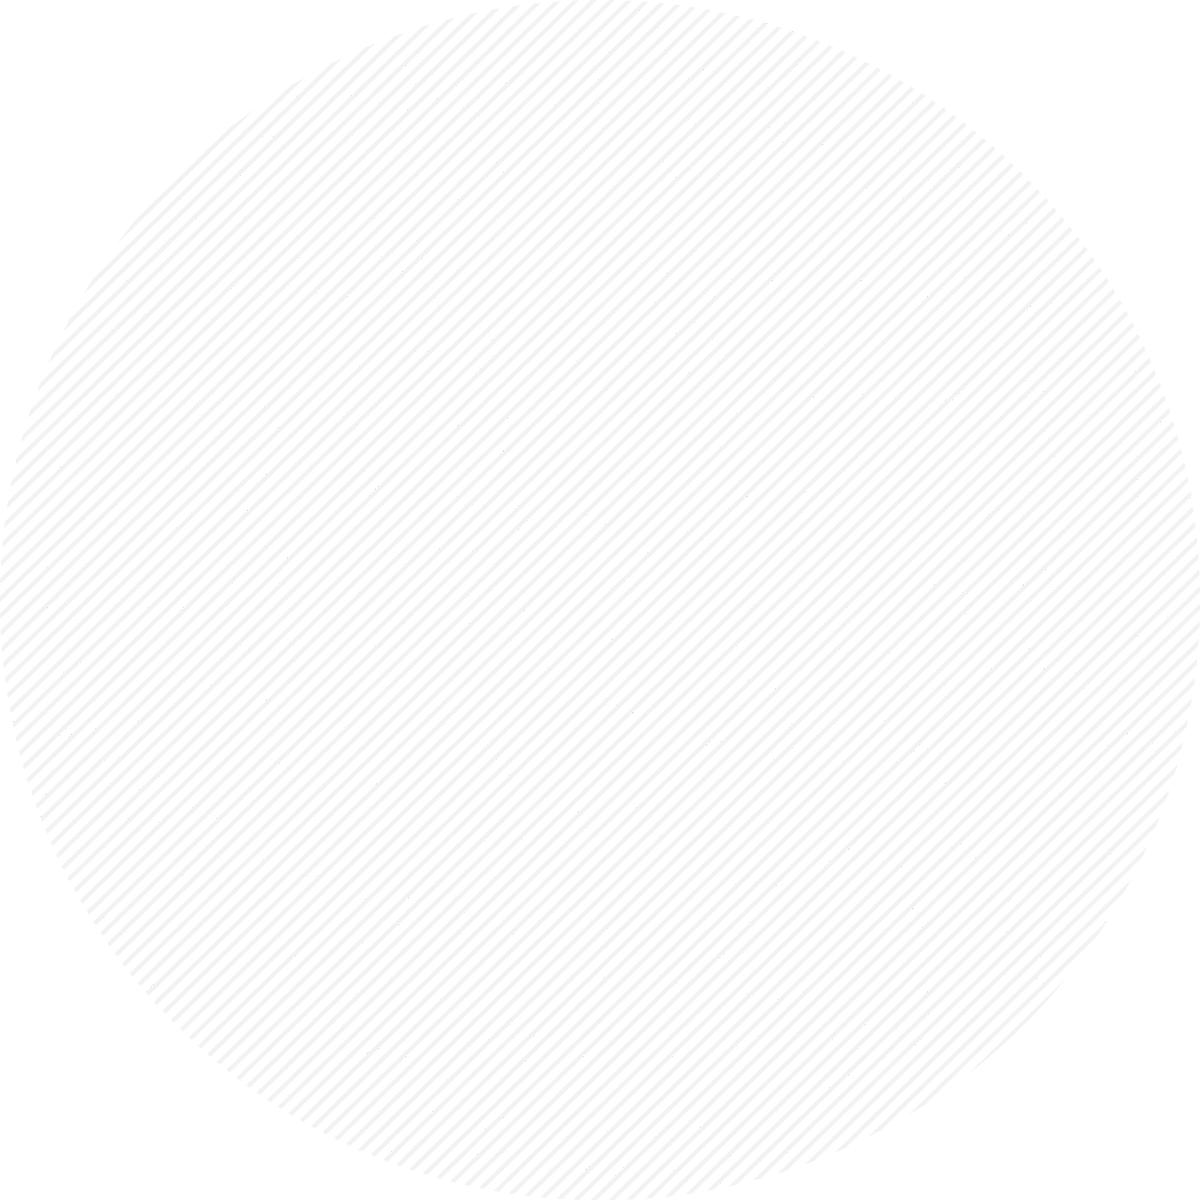 Background Circle Stripes